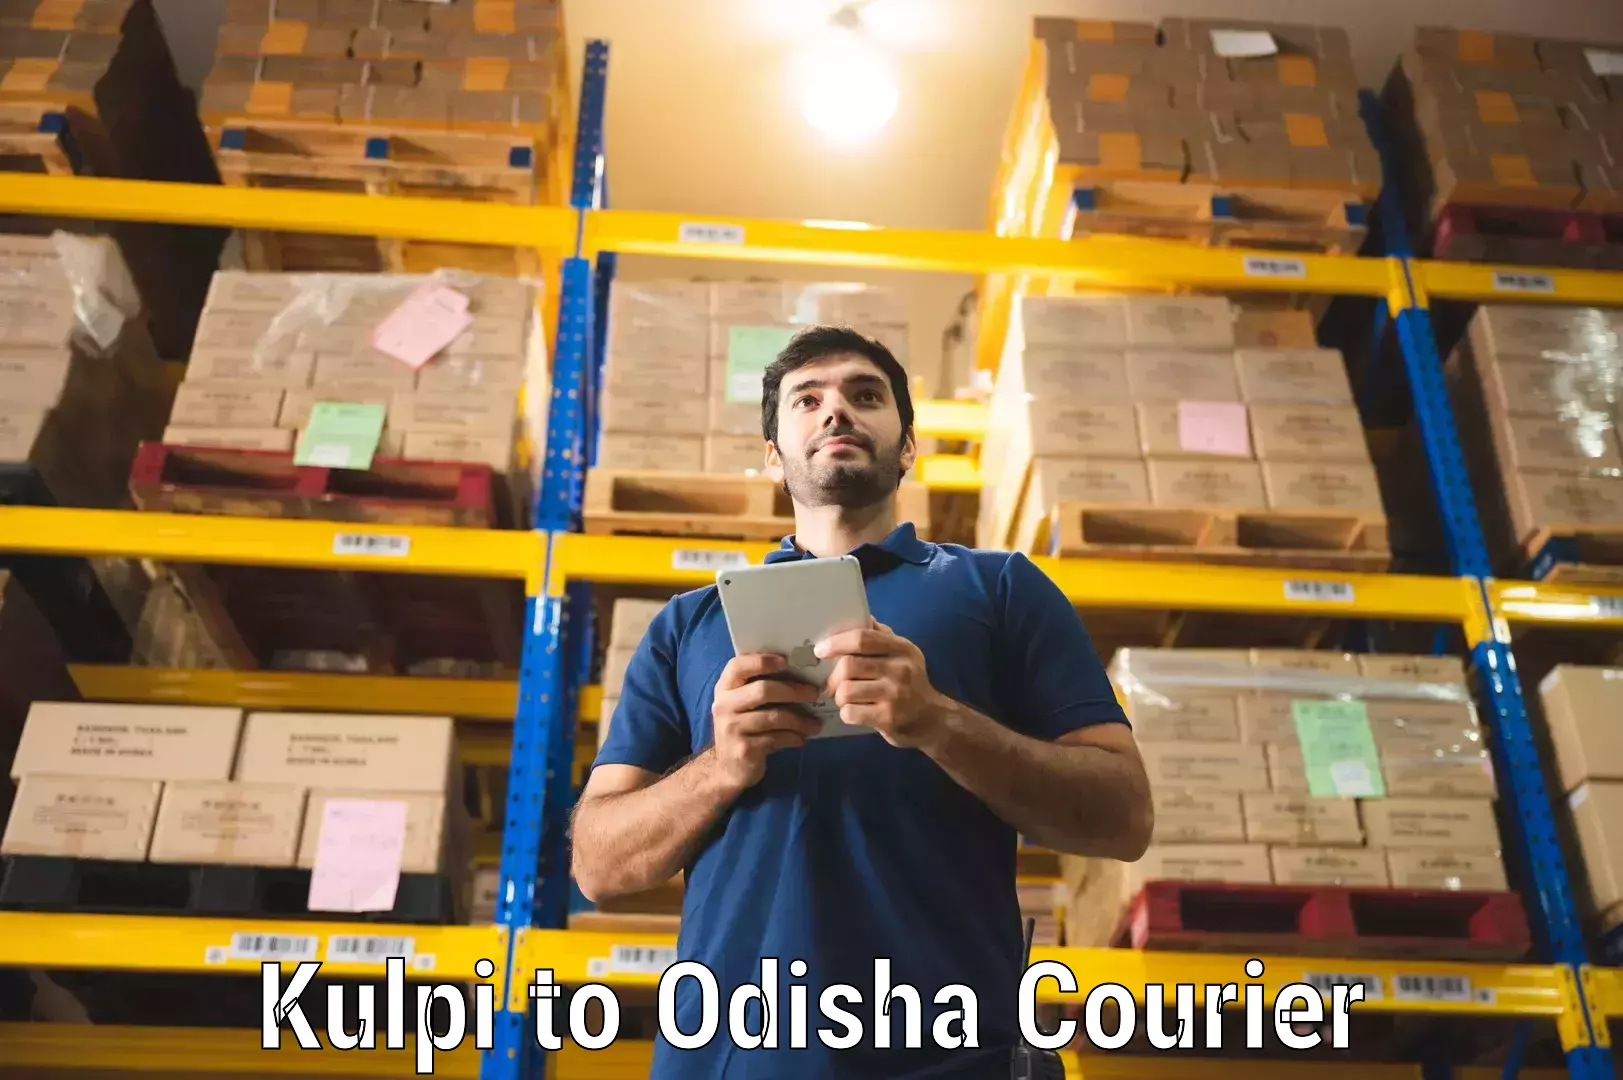 Cash on delivery service Kulpi to Kupari